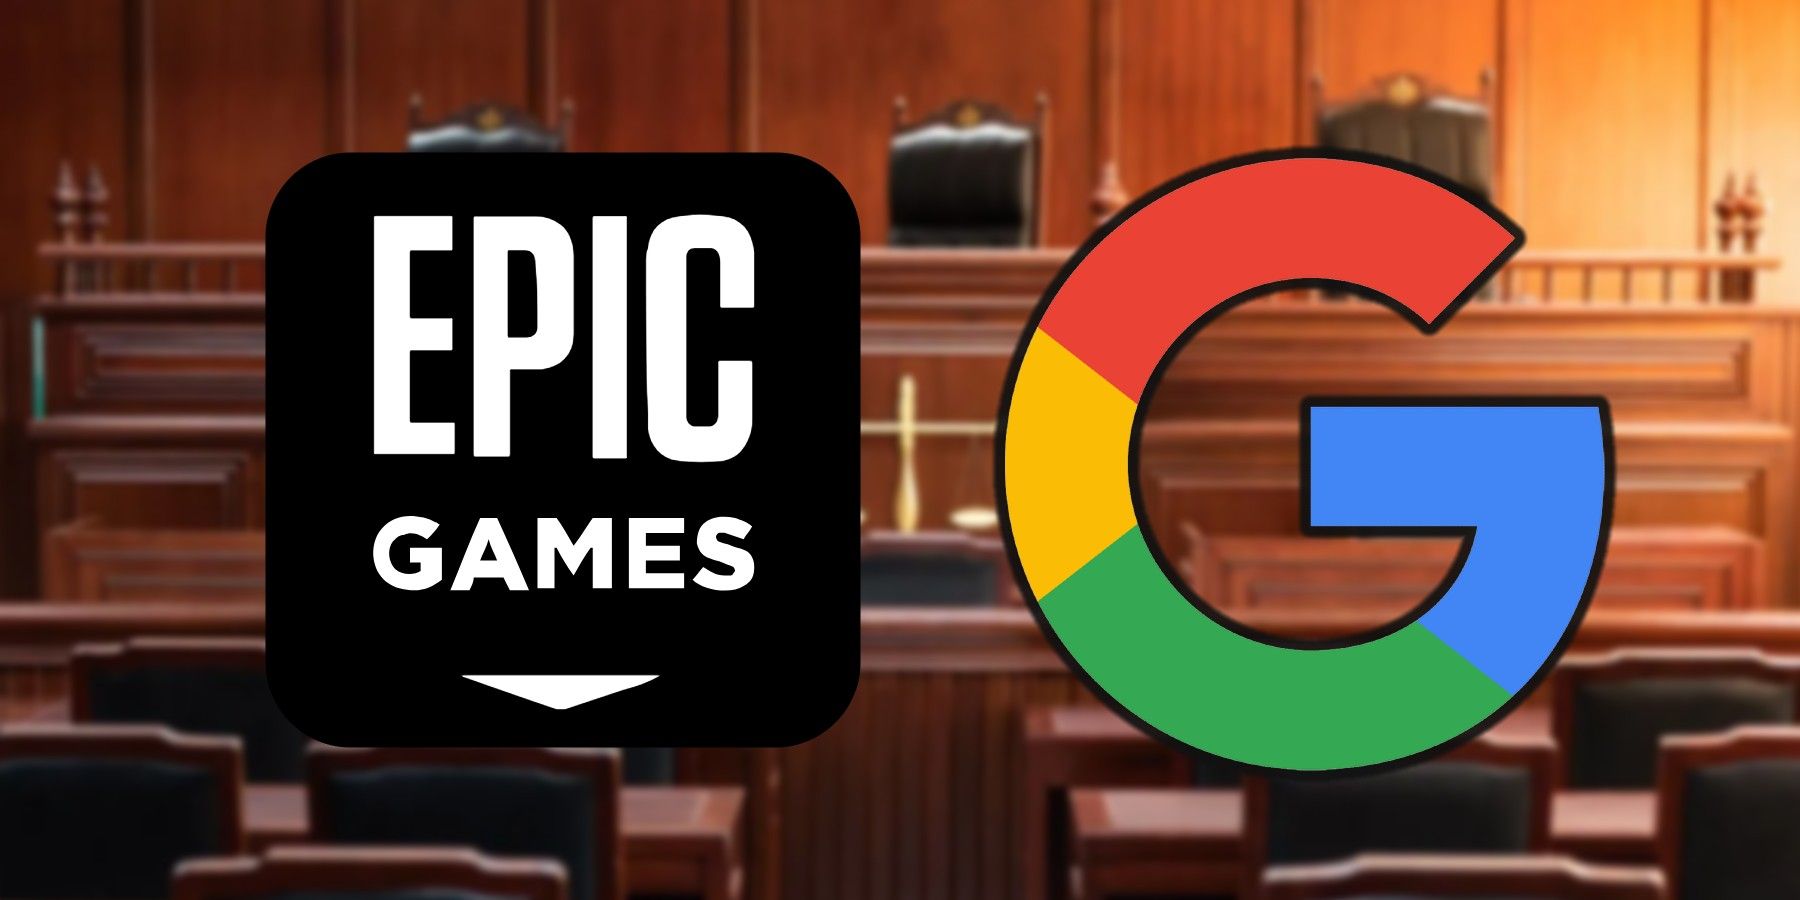 epic-games-google-logos-courtroom